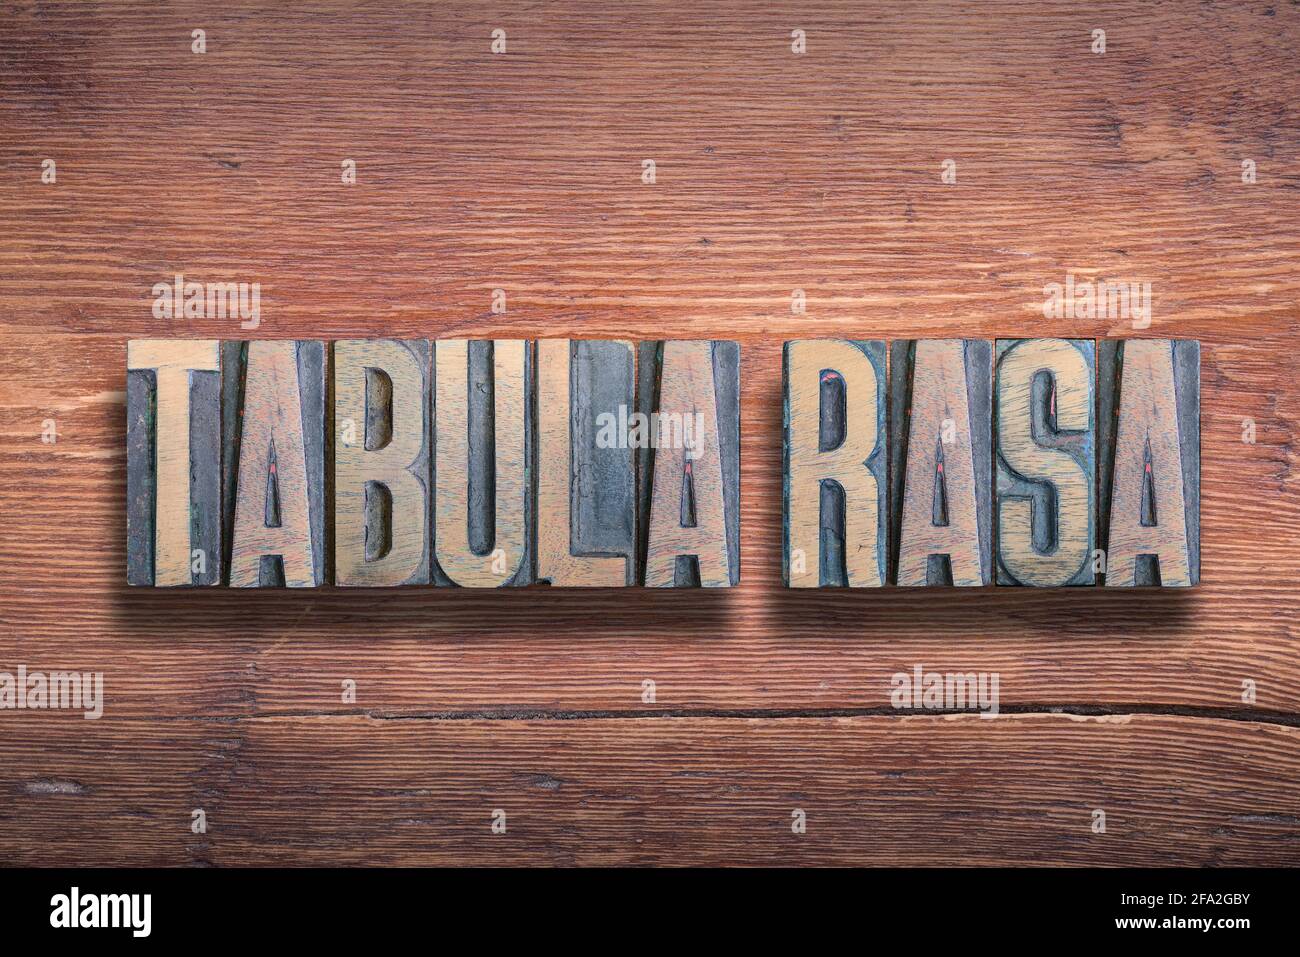 tabula rasa ancient Latin saying meaning «blank slate» combined on vintage varnished wooden surface Stock Photo